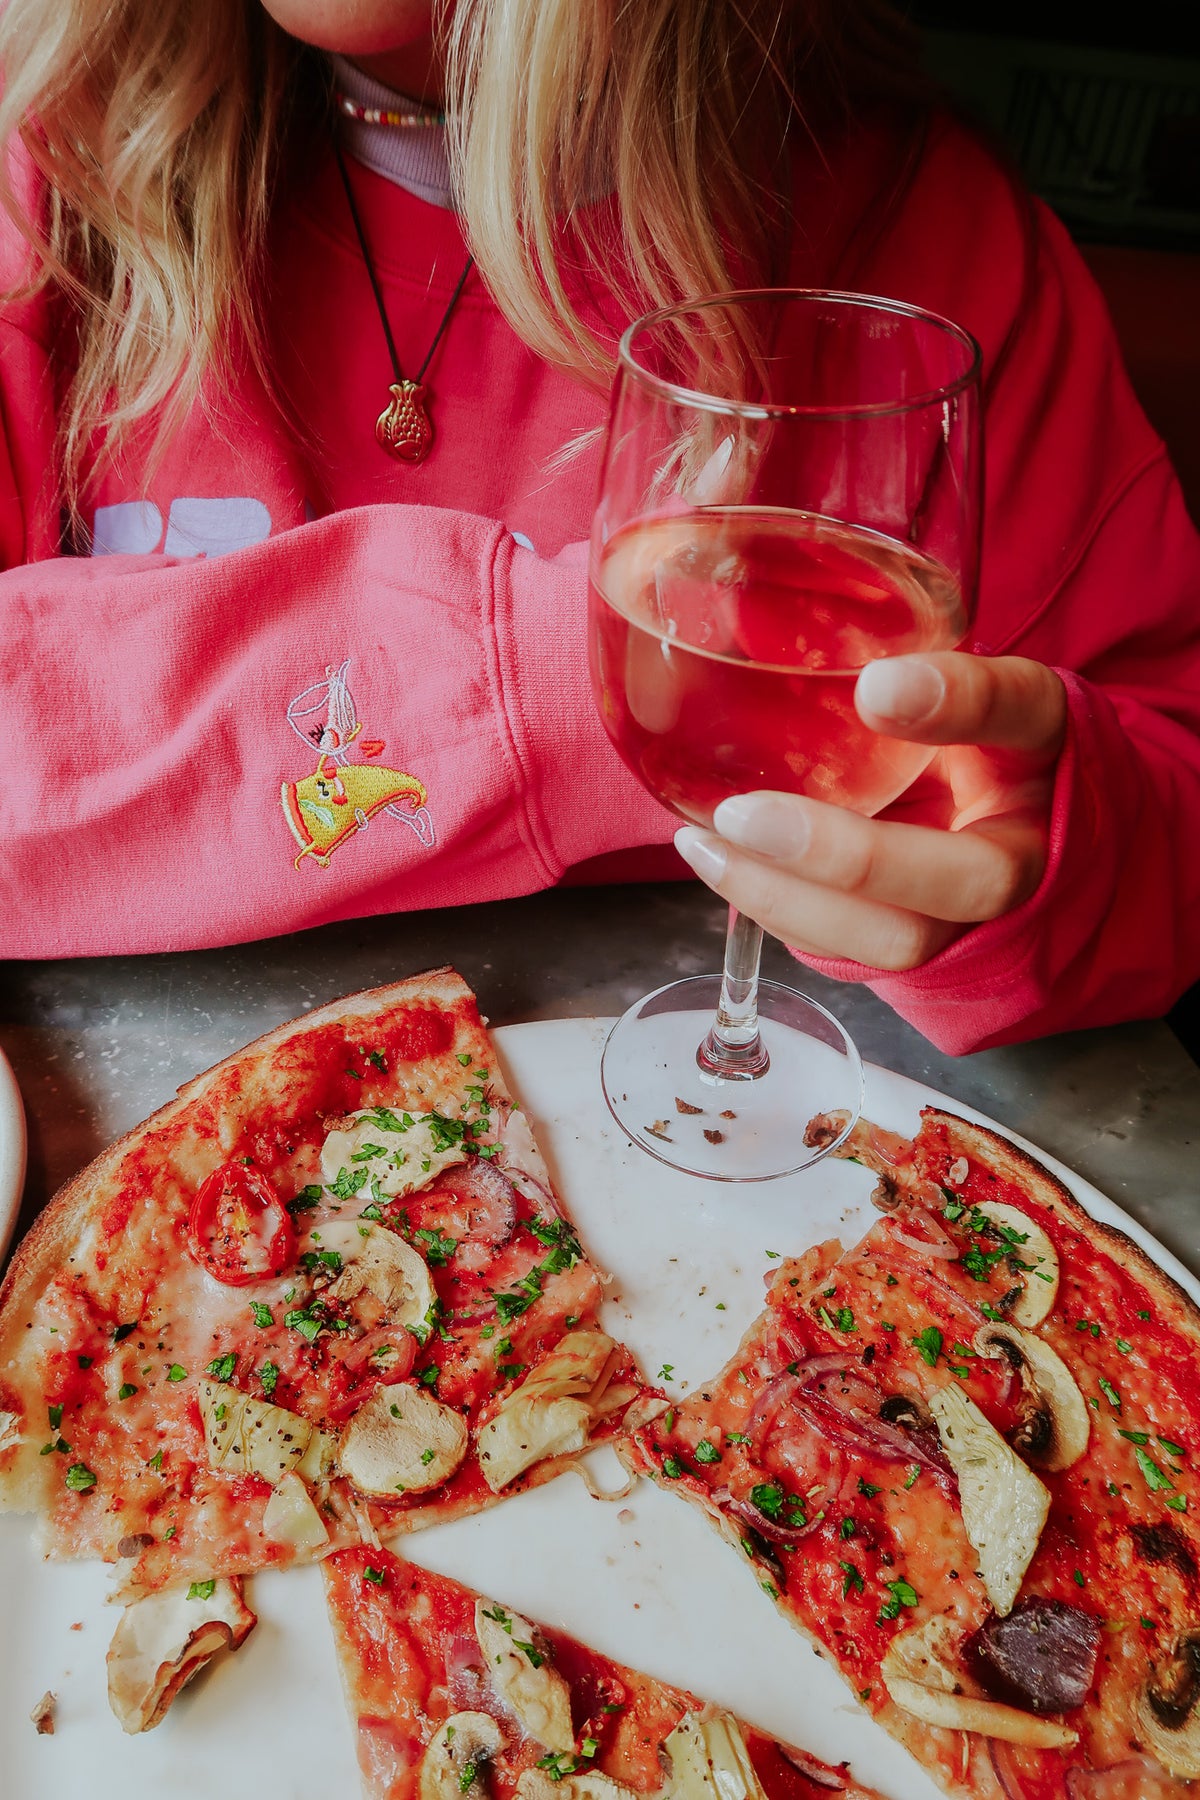 The Pizza &amp; Wine Oversized Sweatshirt